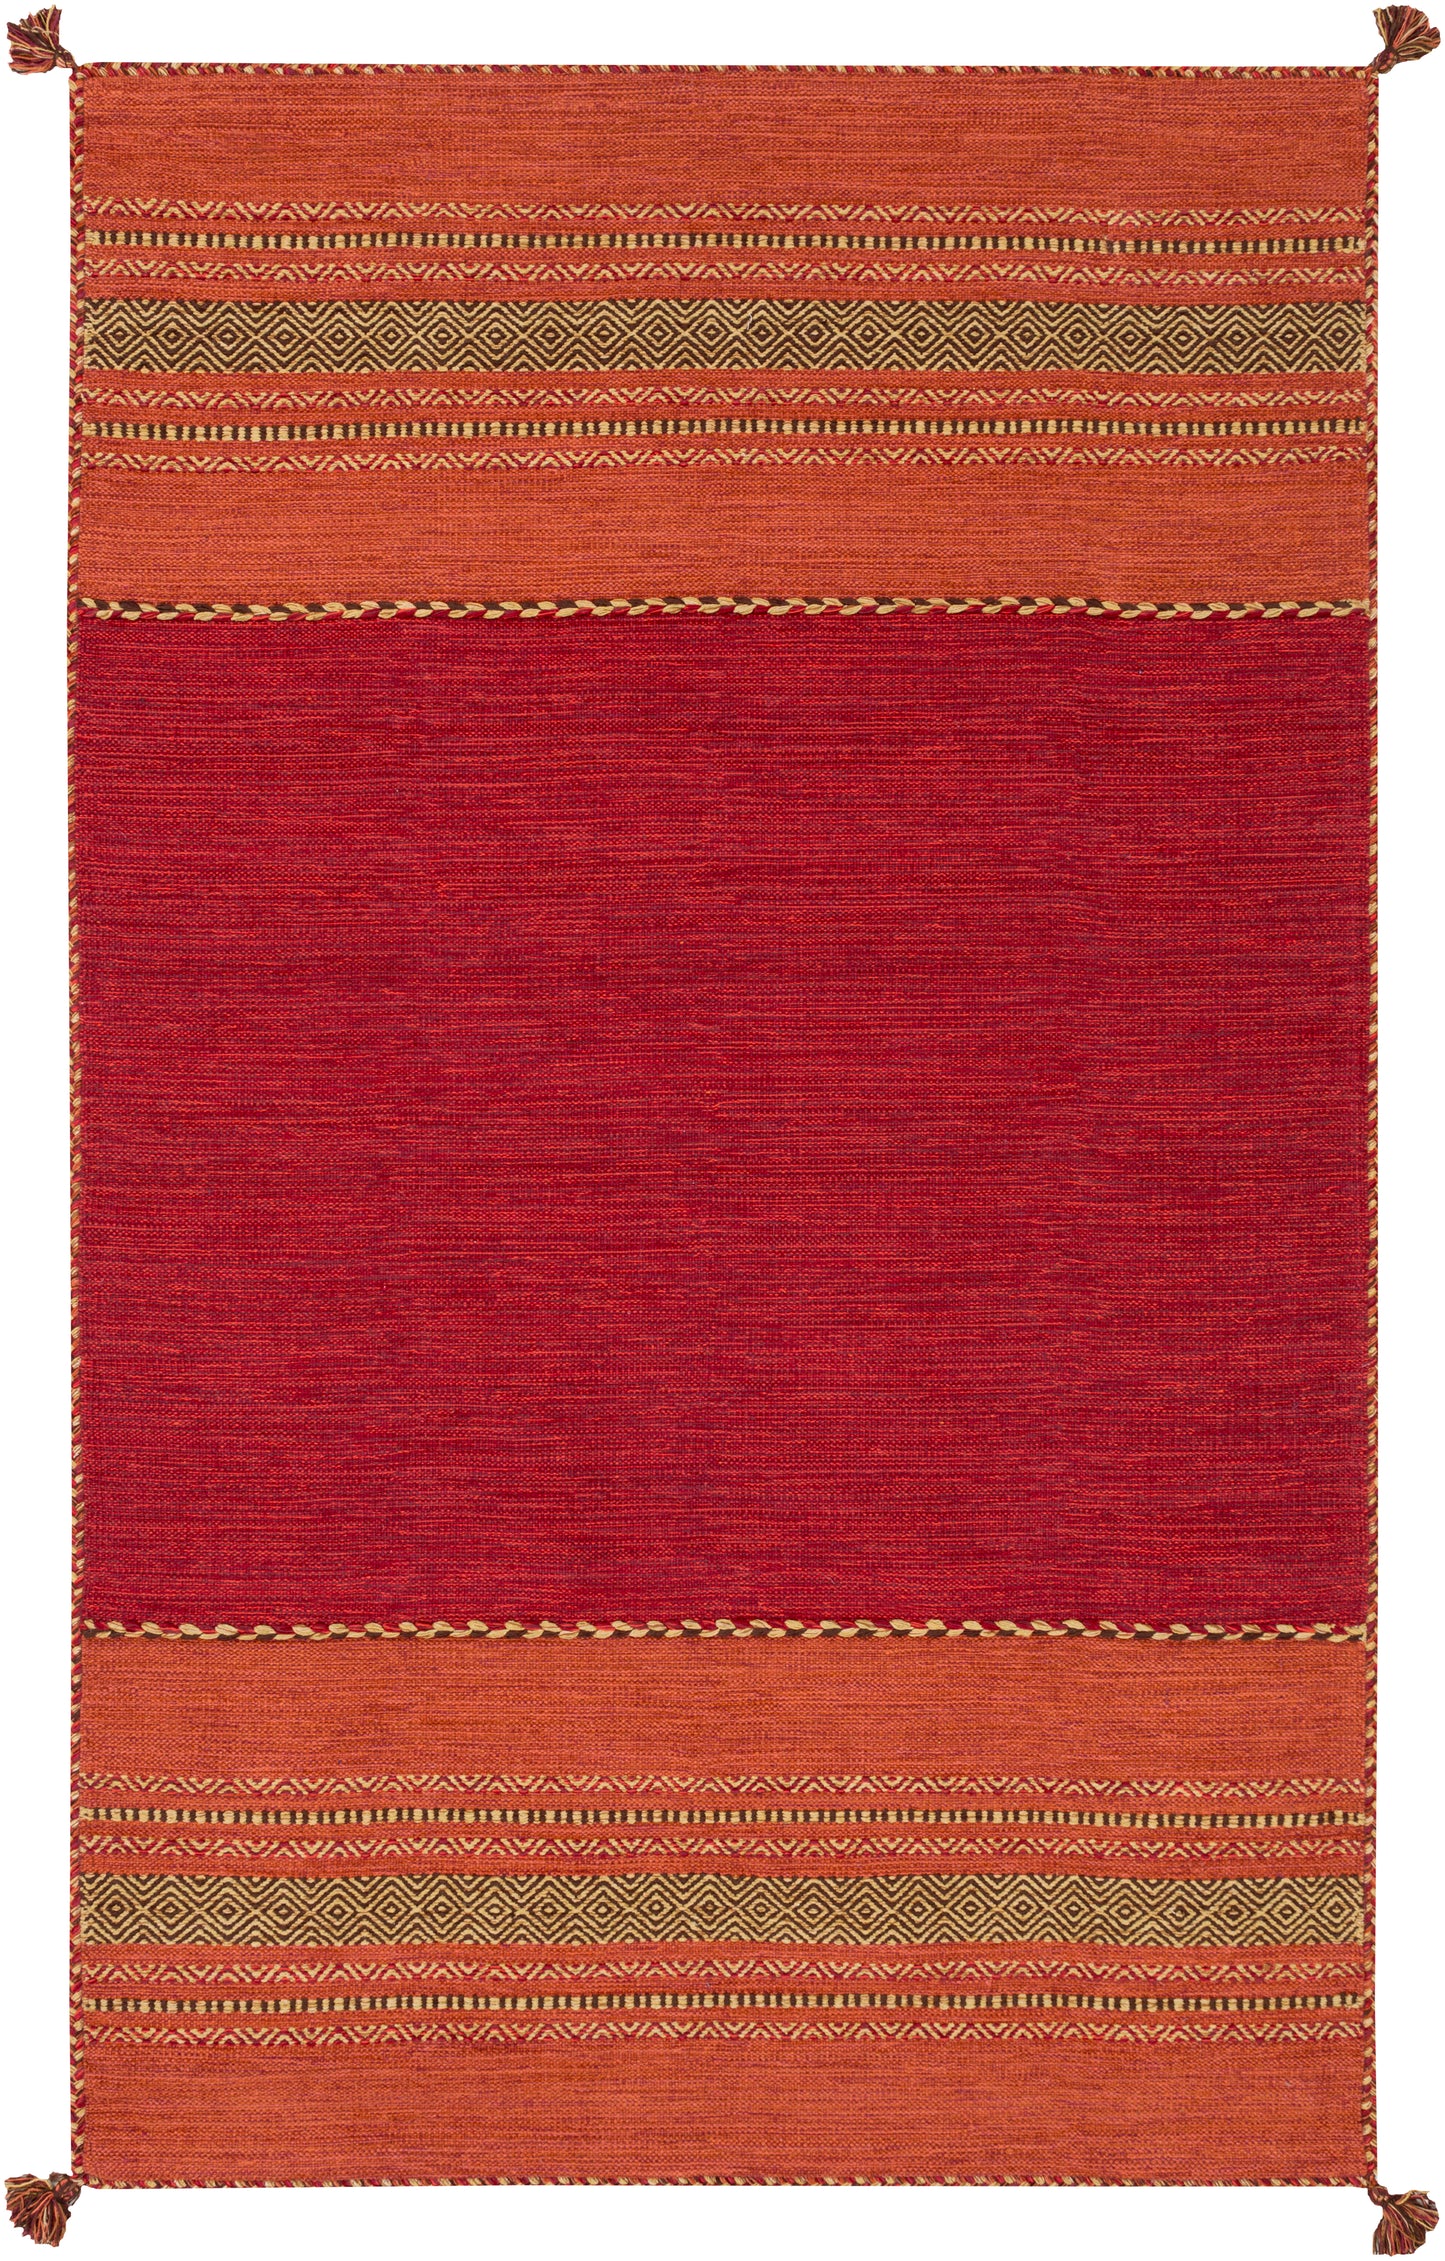 Trenza 12940 Hand Woven Cotton Indoor Area Rug by Surya Rugs